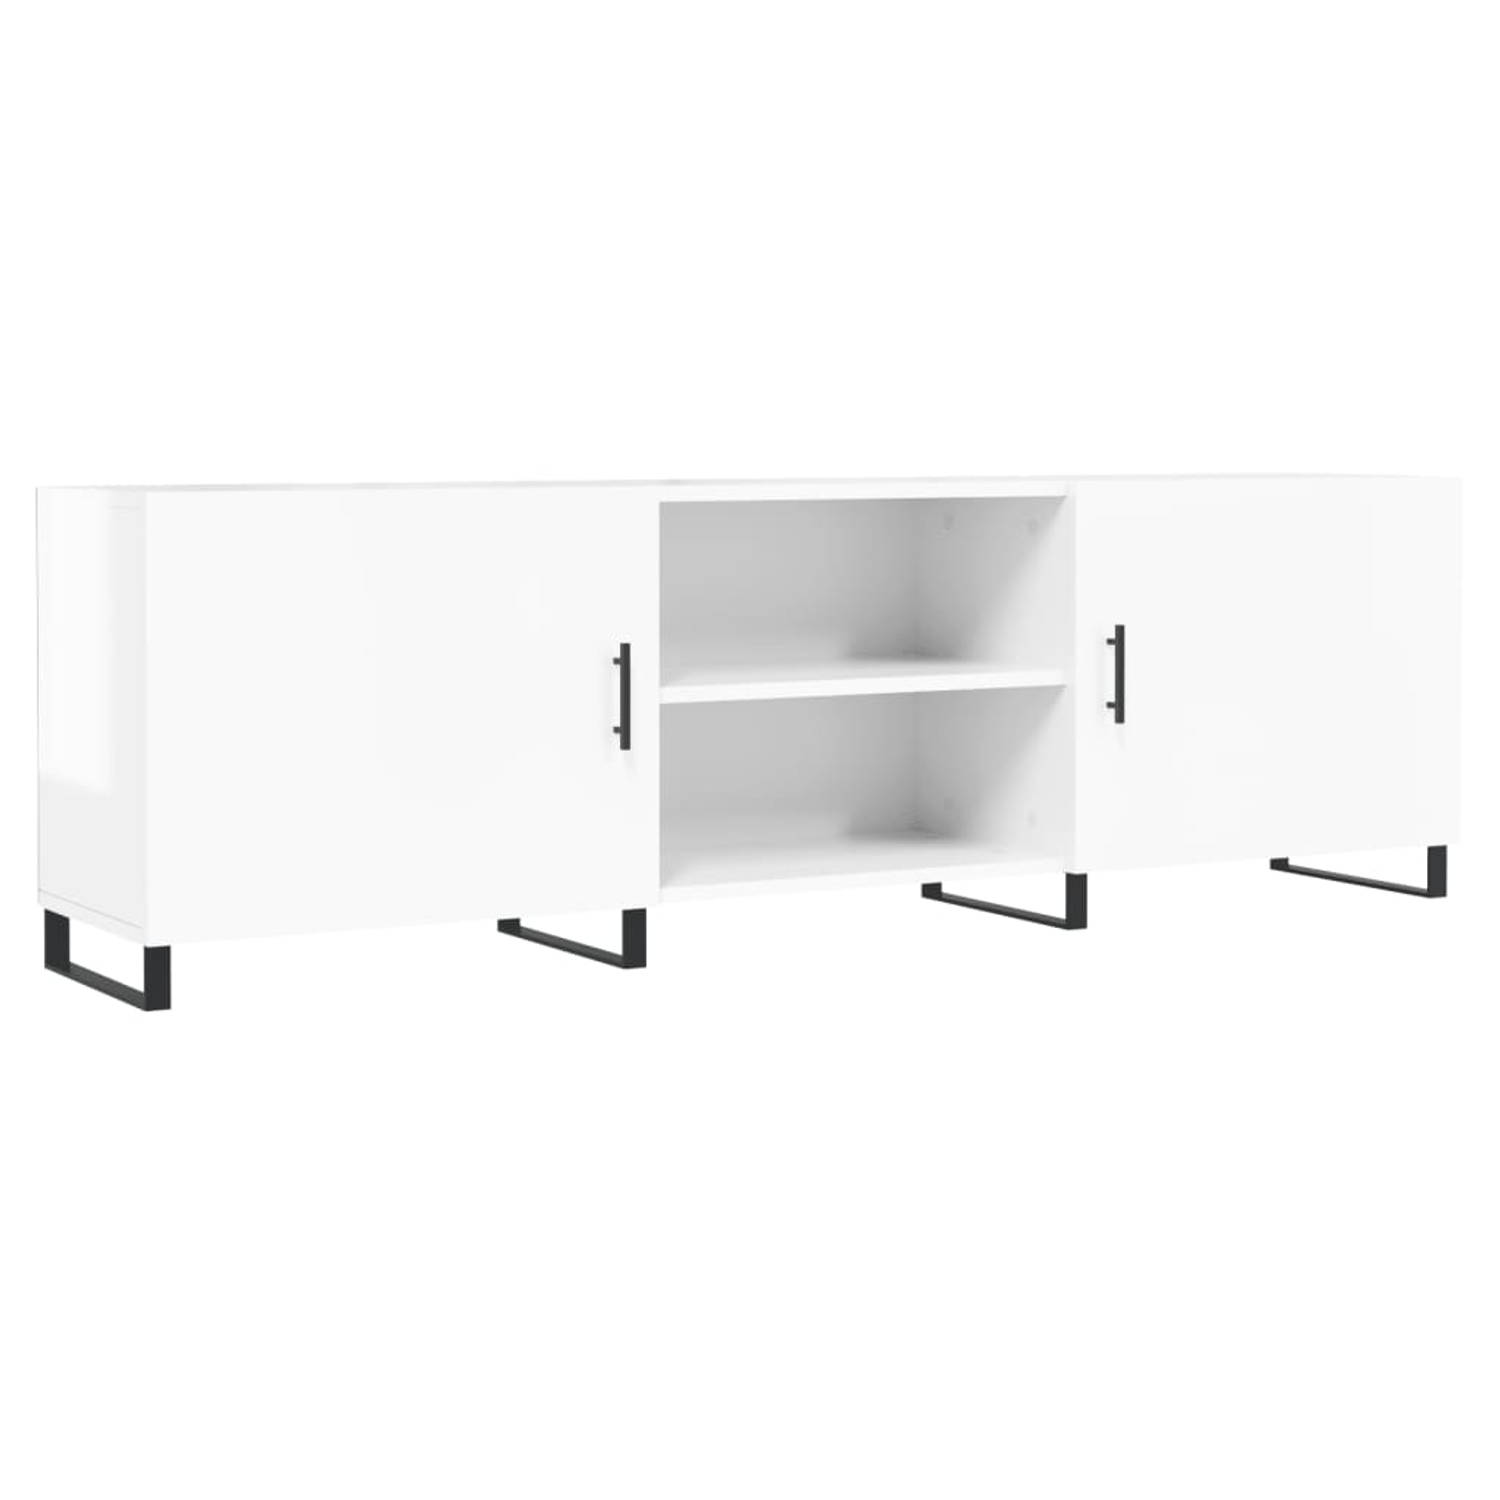 The Living Store TV-meubel - Hoogglans wit - 150 x 30 x 50 cm (B x D x H)